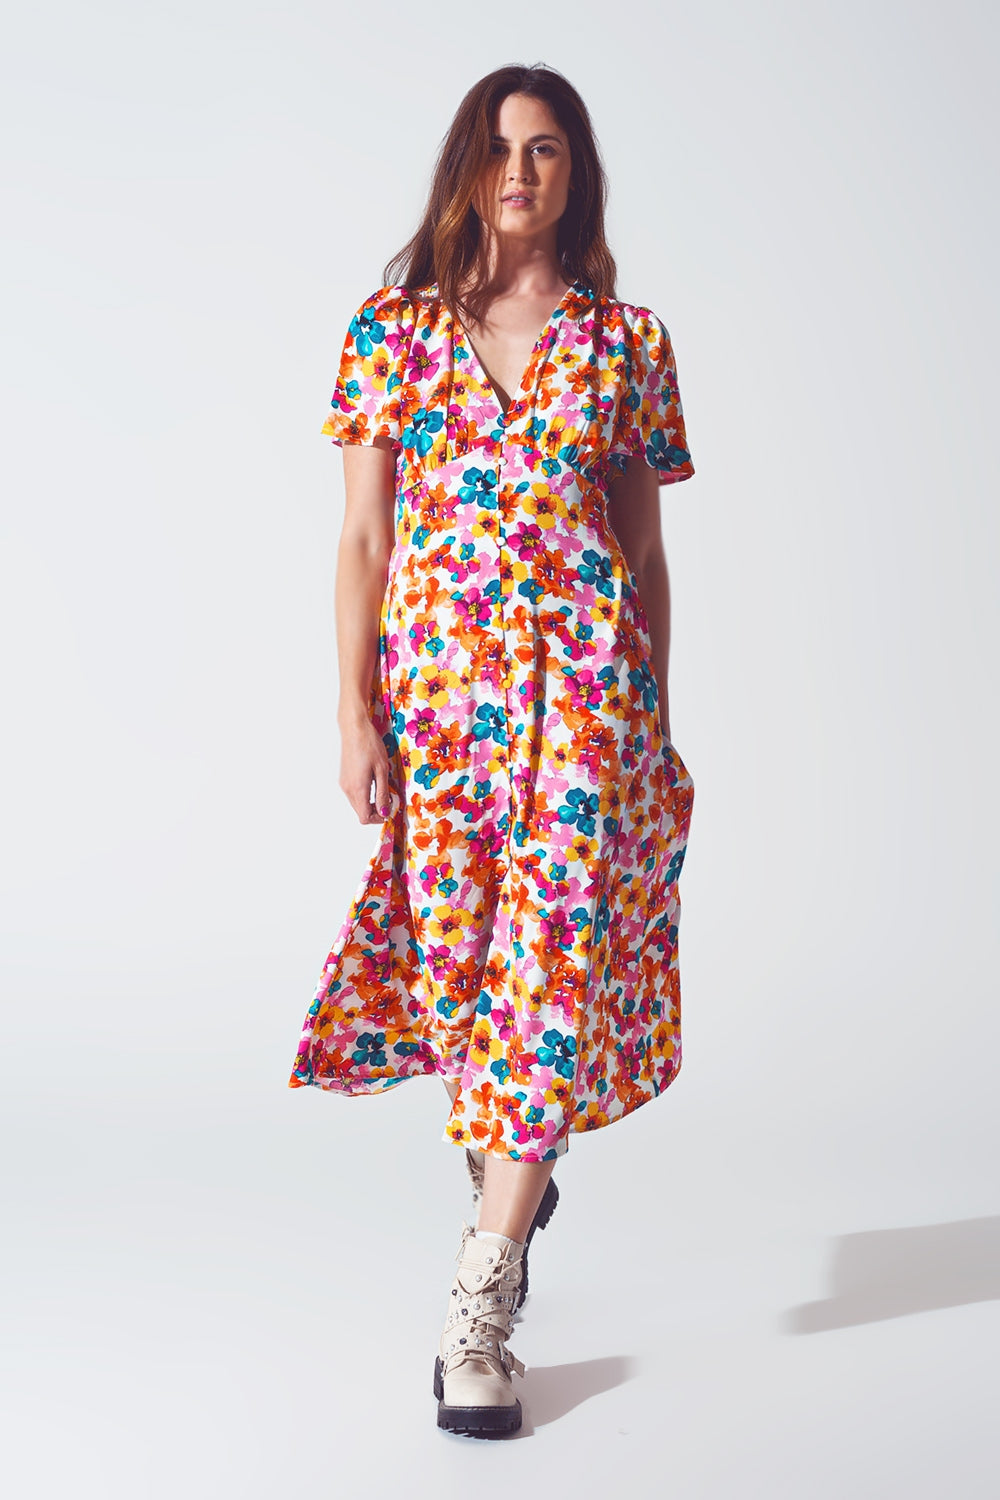 Q2 Midi Cinched In Wist Dress In Multicolot Floral Print